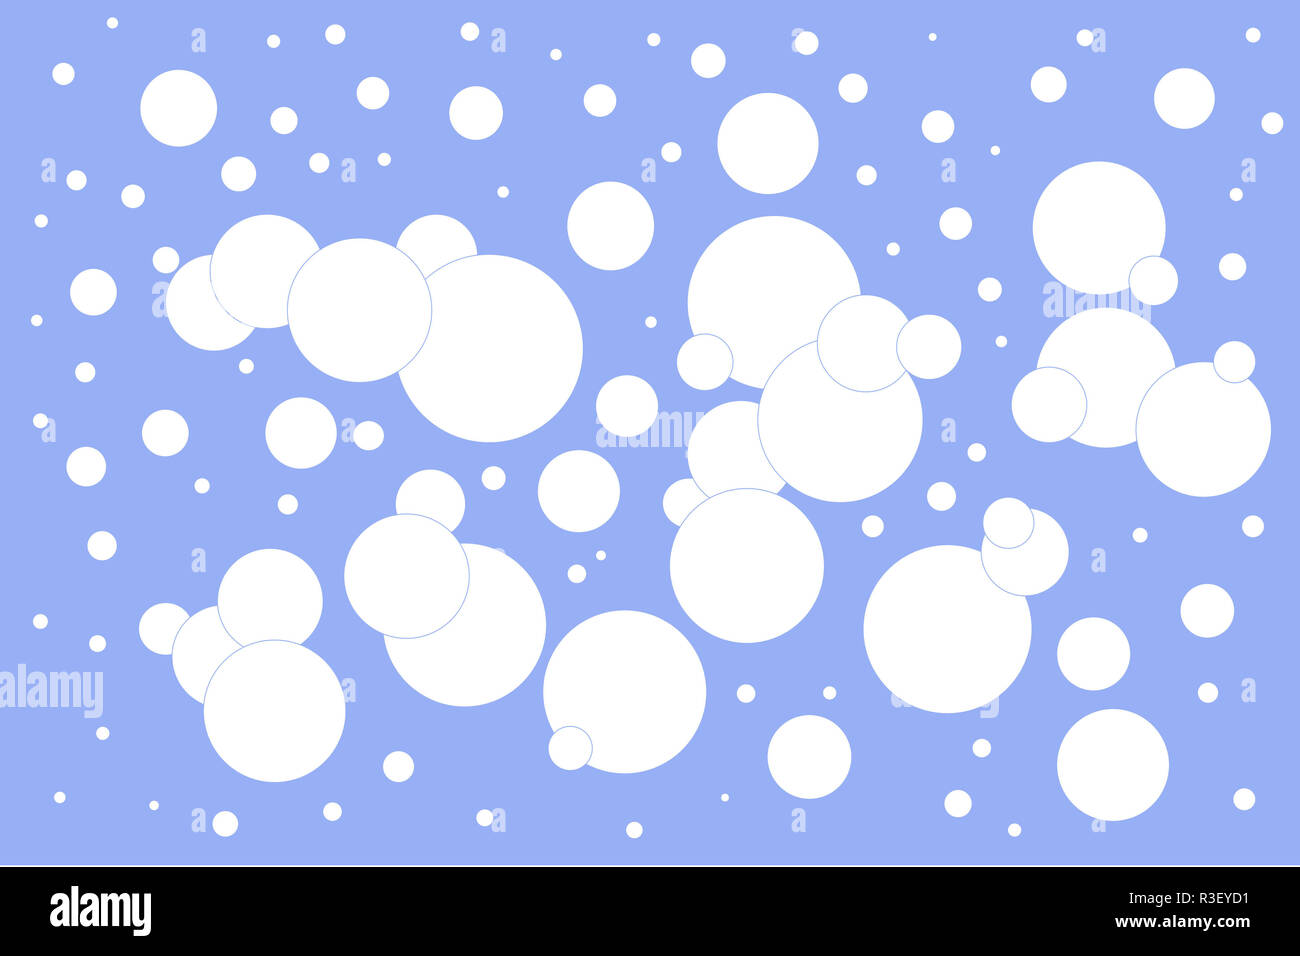 white bubbles against a light blue background Stock Photo